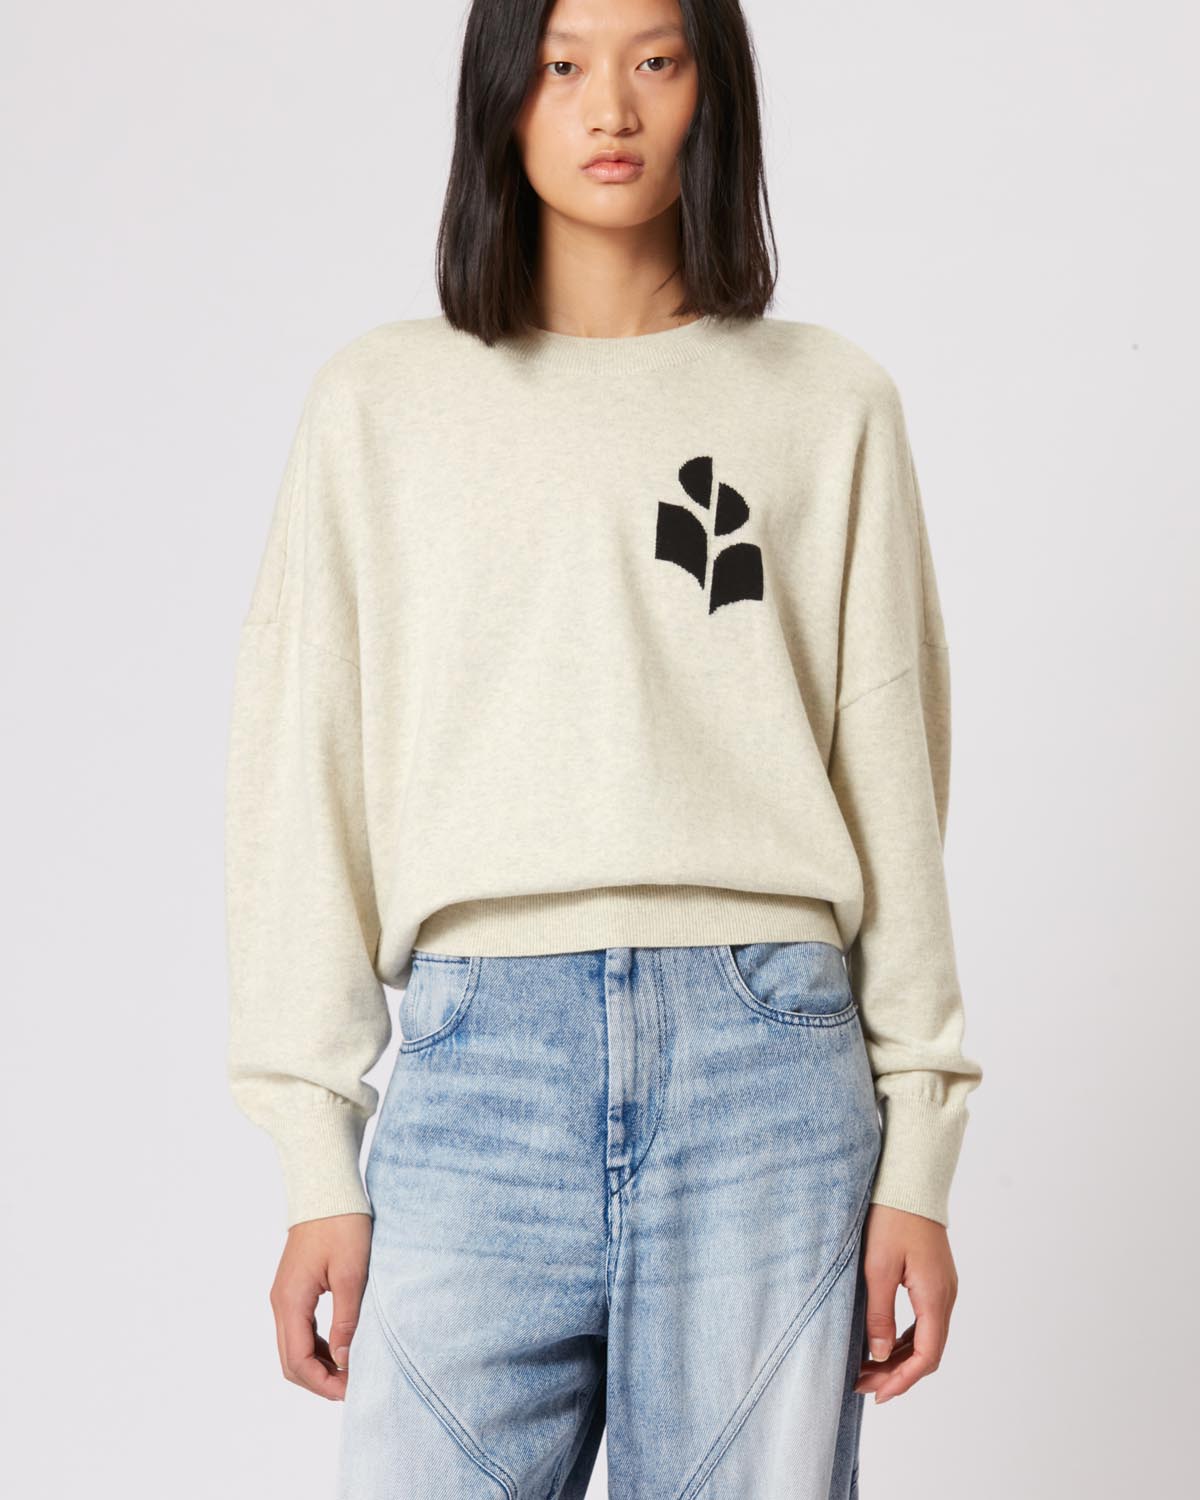 Marisans sweater Woman Light gray 5